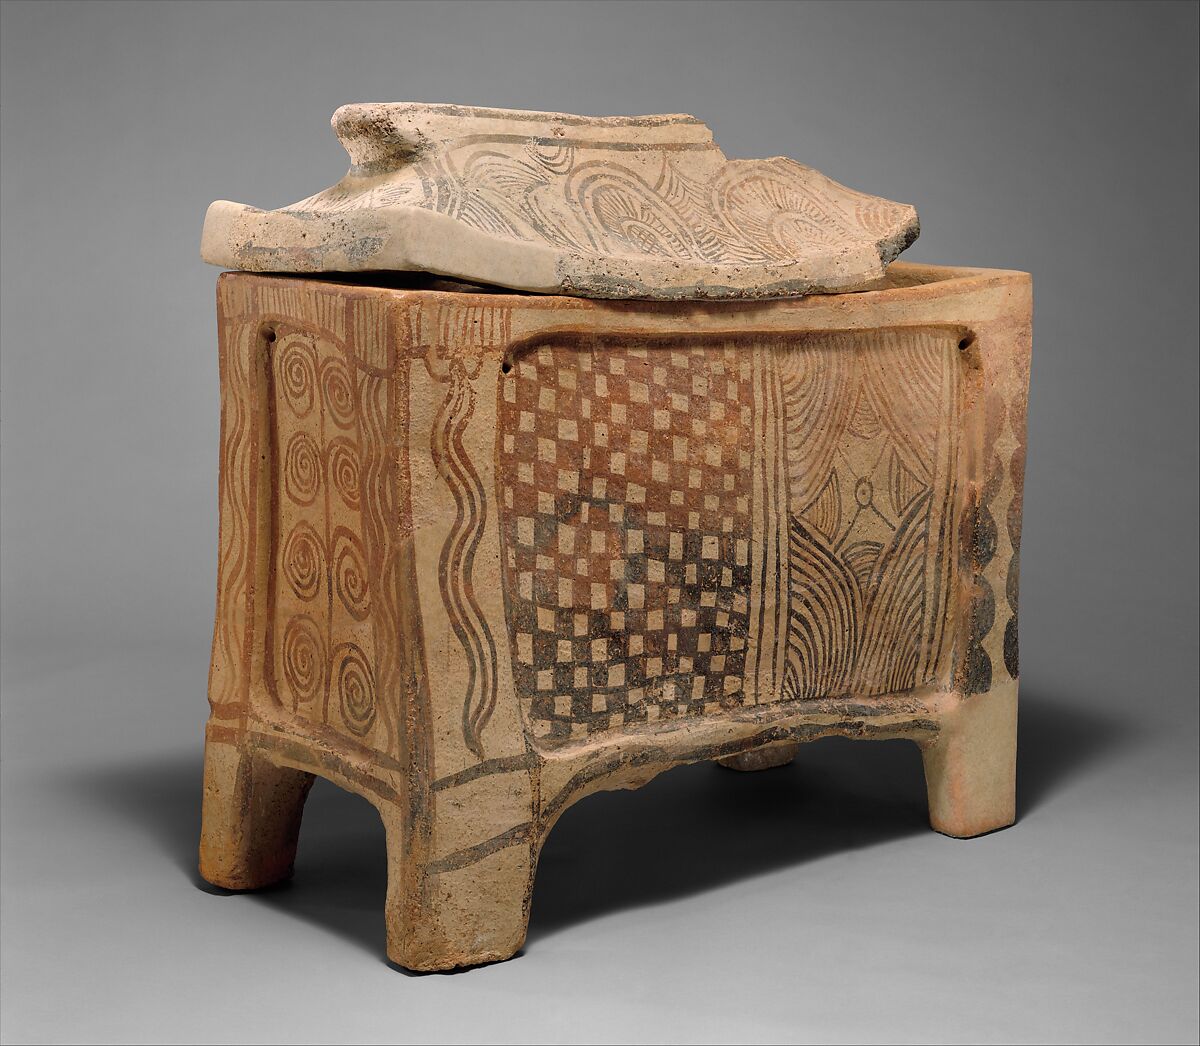 Terracotta larnax (chest-shaped coffin)